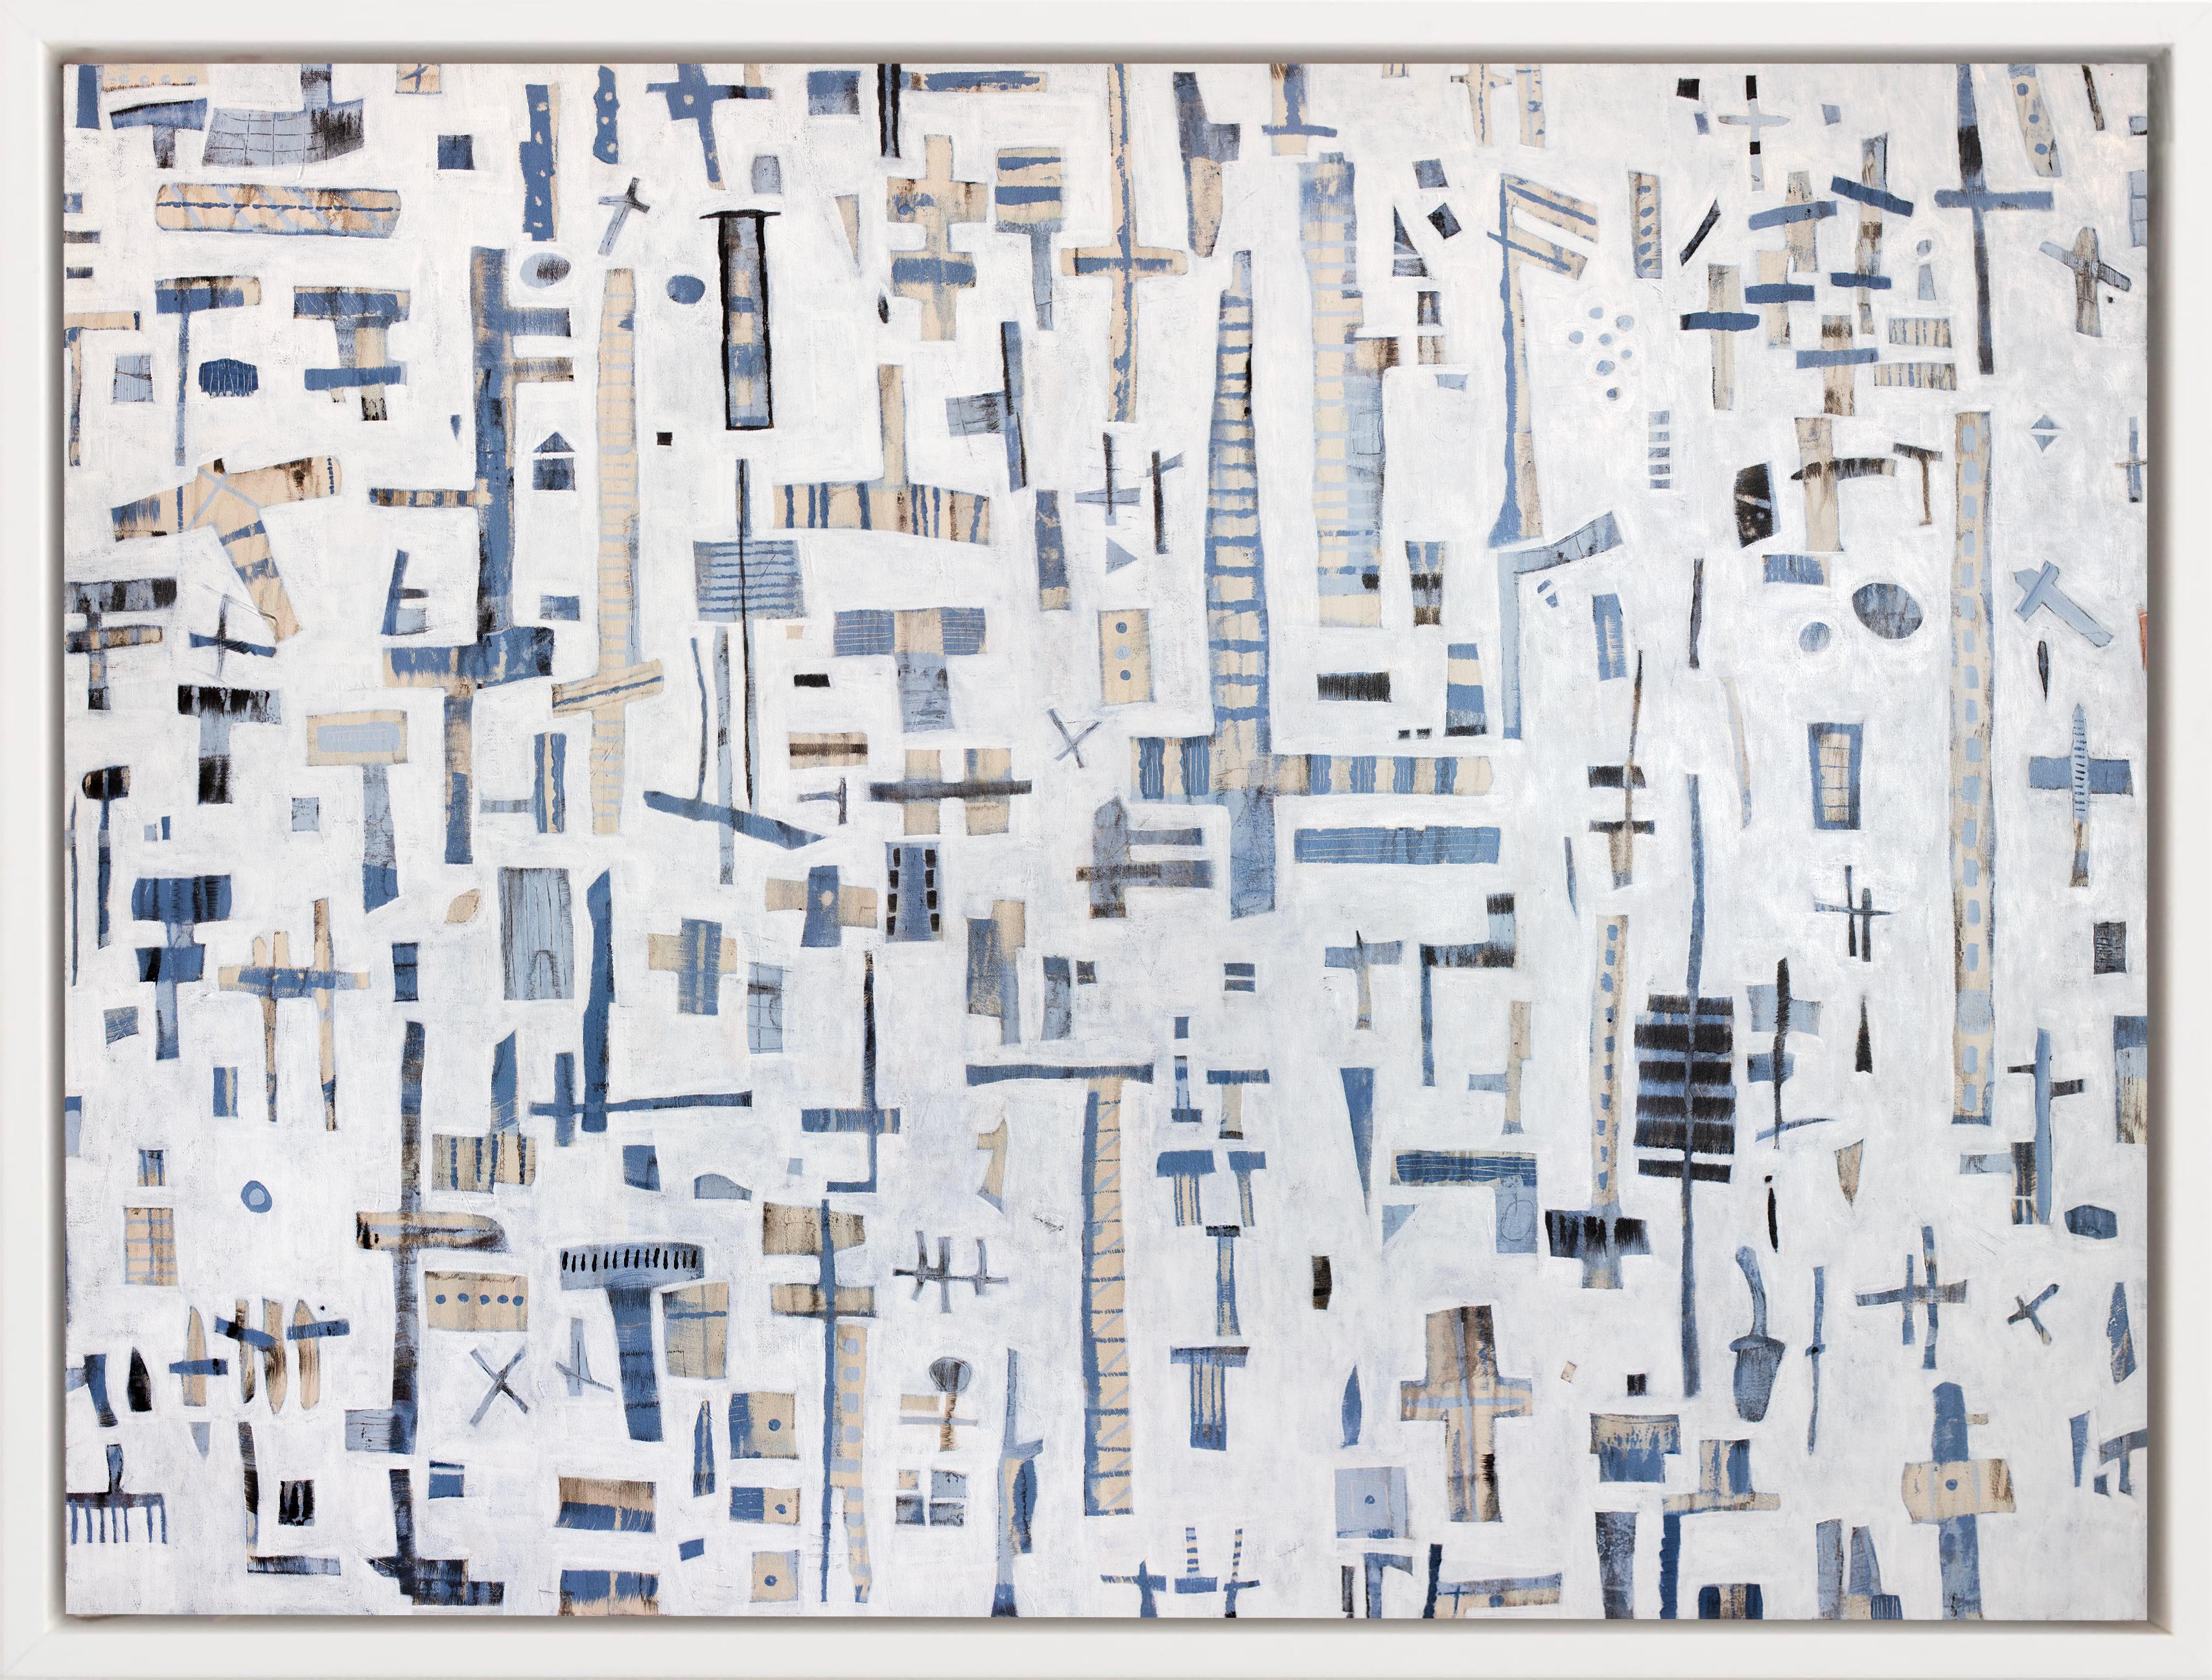 Abstract Print Sofie Swann - "Flight to Nowhere" Impression giclée en édition limitée, 24" x 32"